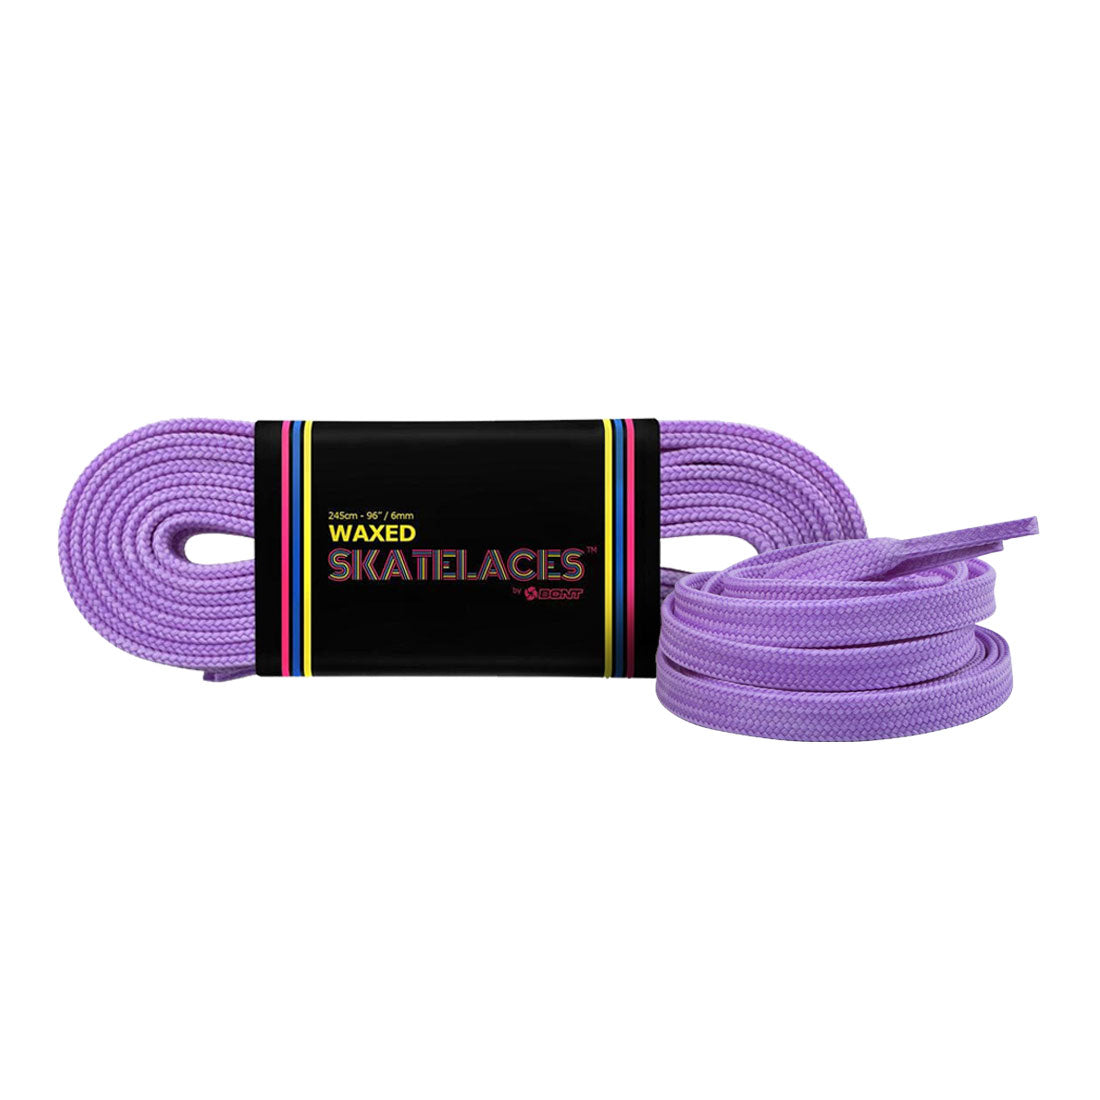 Bont Waxed 8mm Laces - 150cm/59in Amethyst Purple Laces